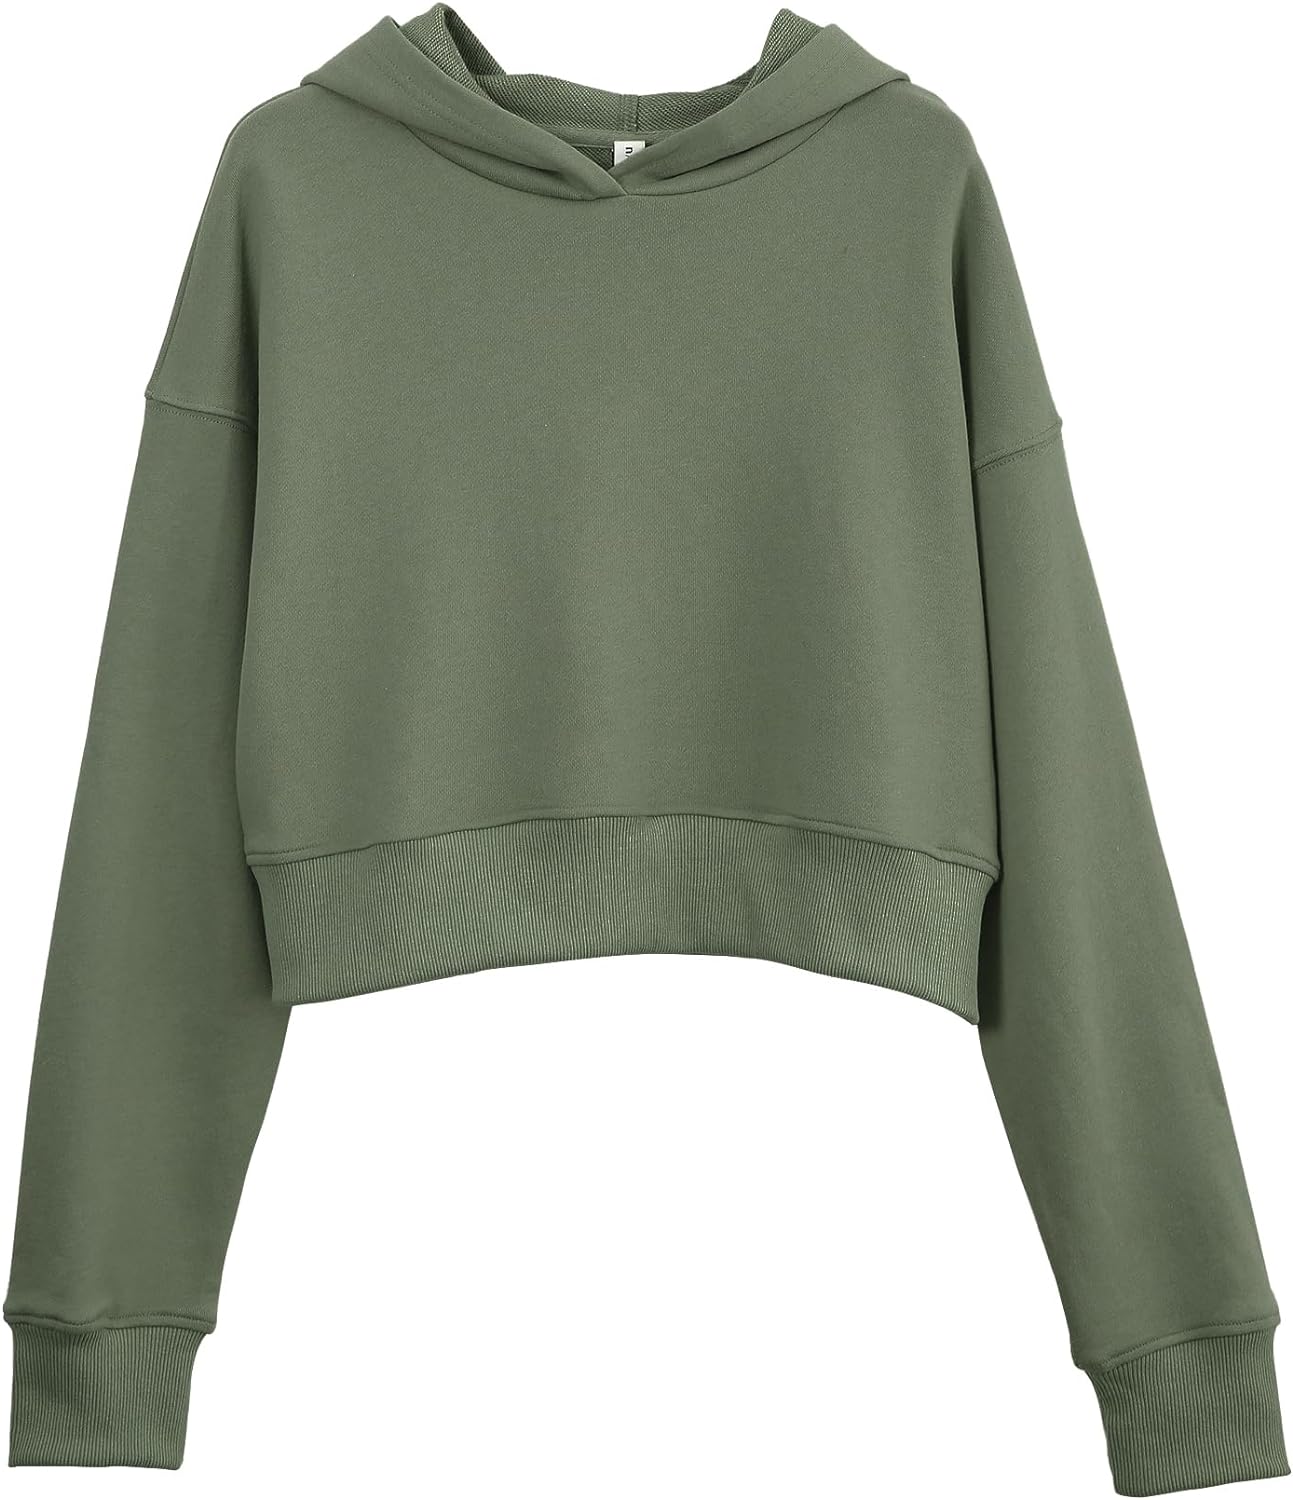 NTG Fad Dusty Green / Medium Amazhiyu Women’s Cropped Hoodie with Hood Casual Long Sleeve Crop Top Sweatshirt